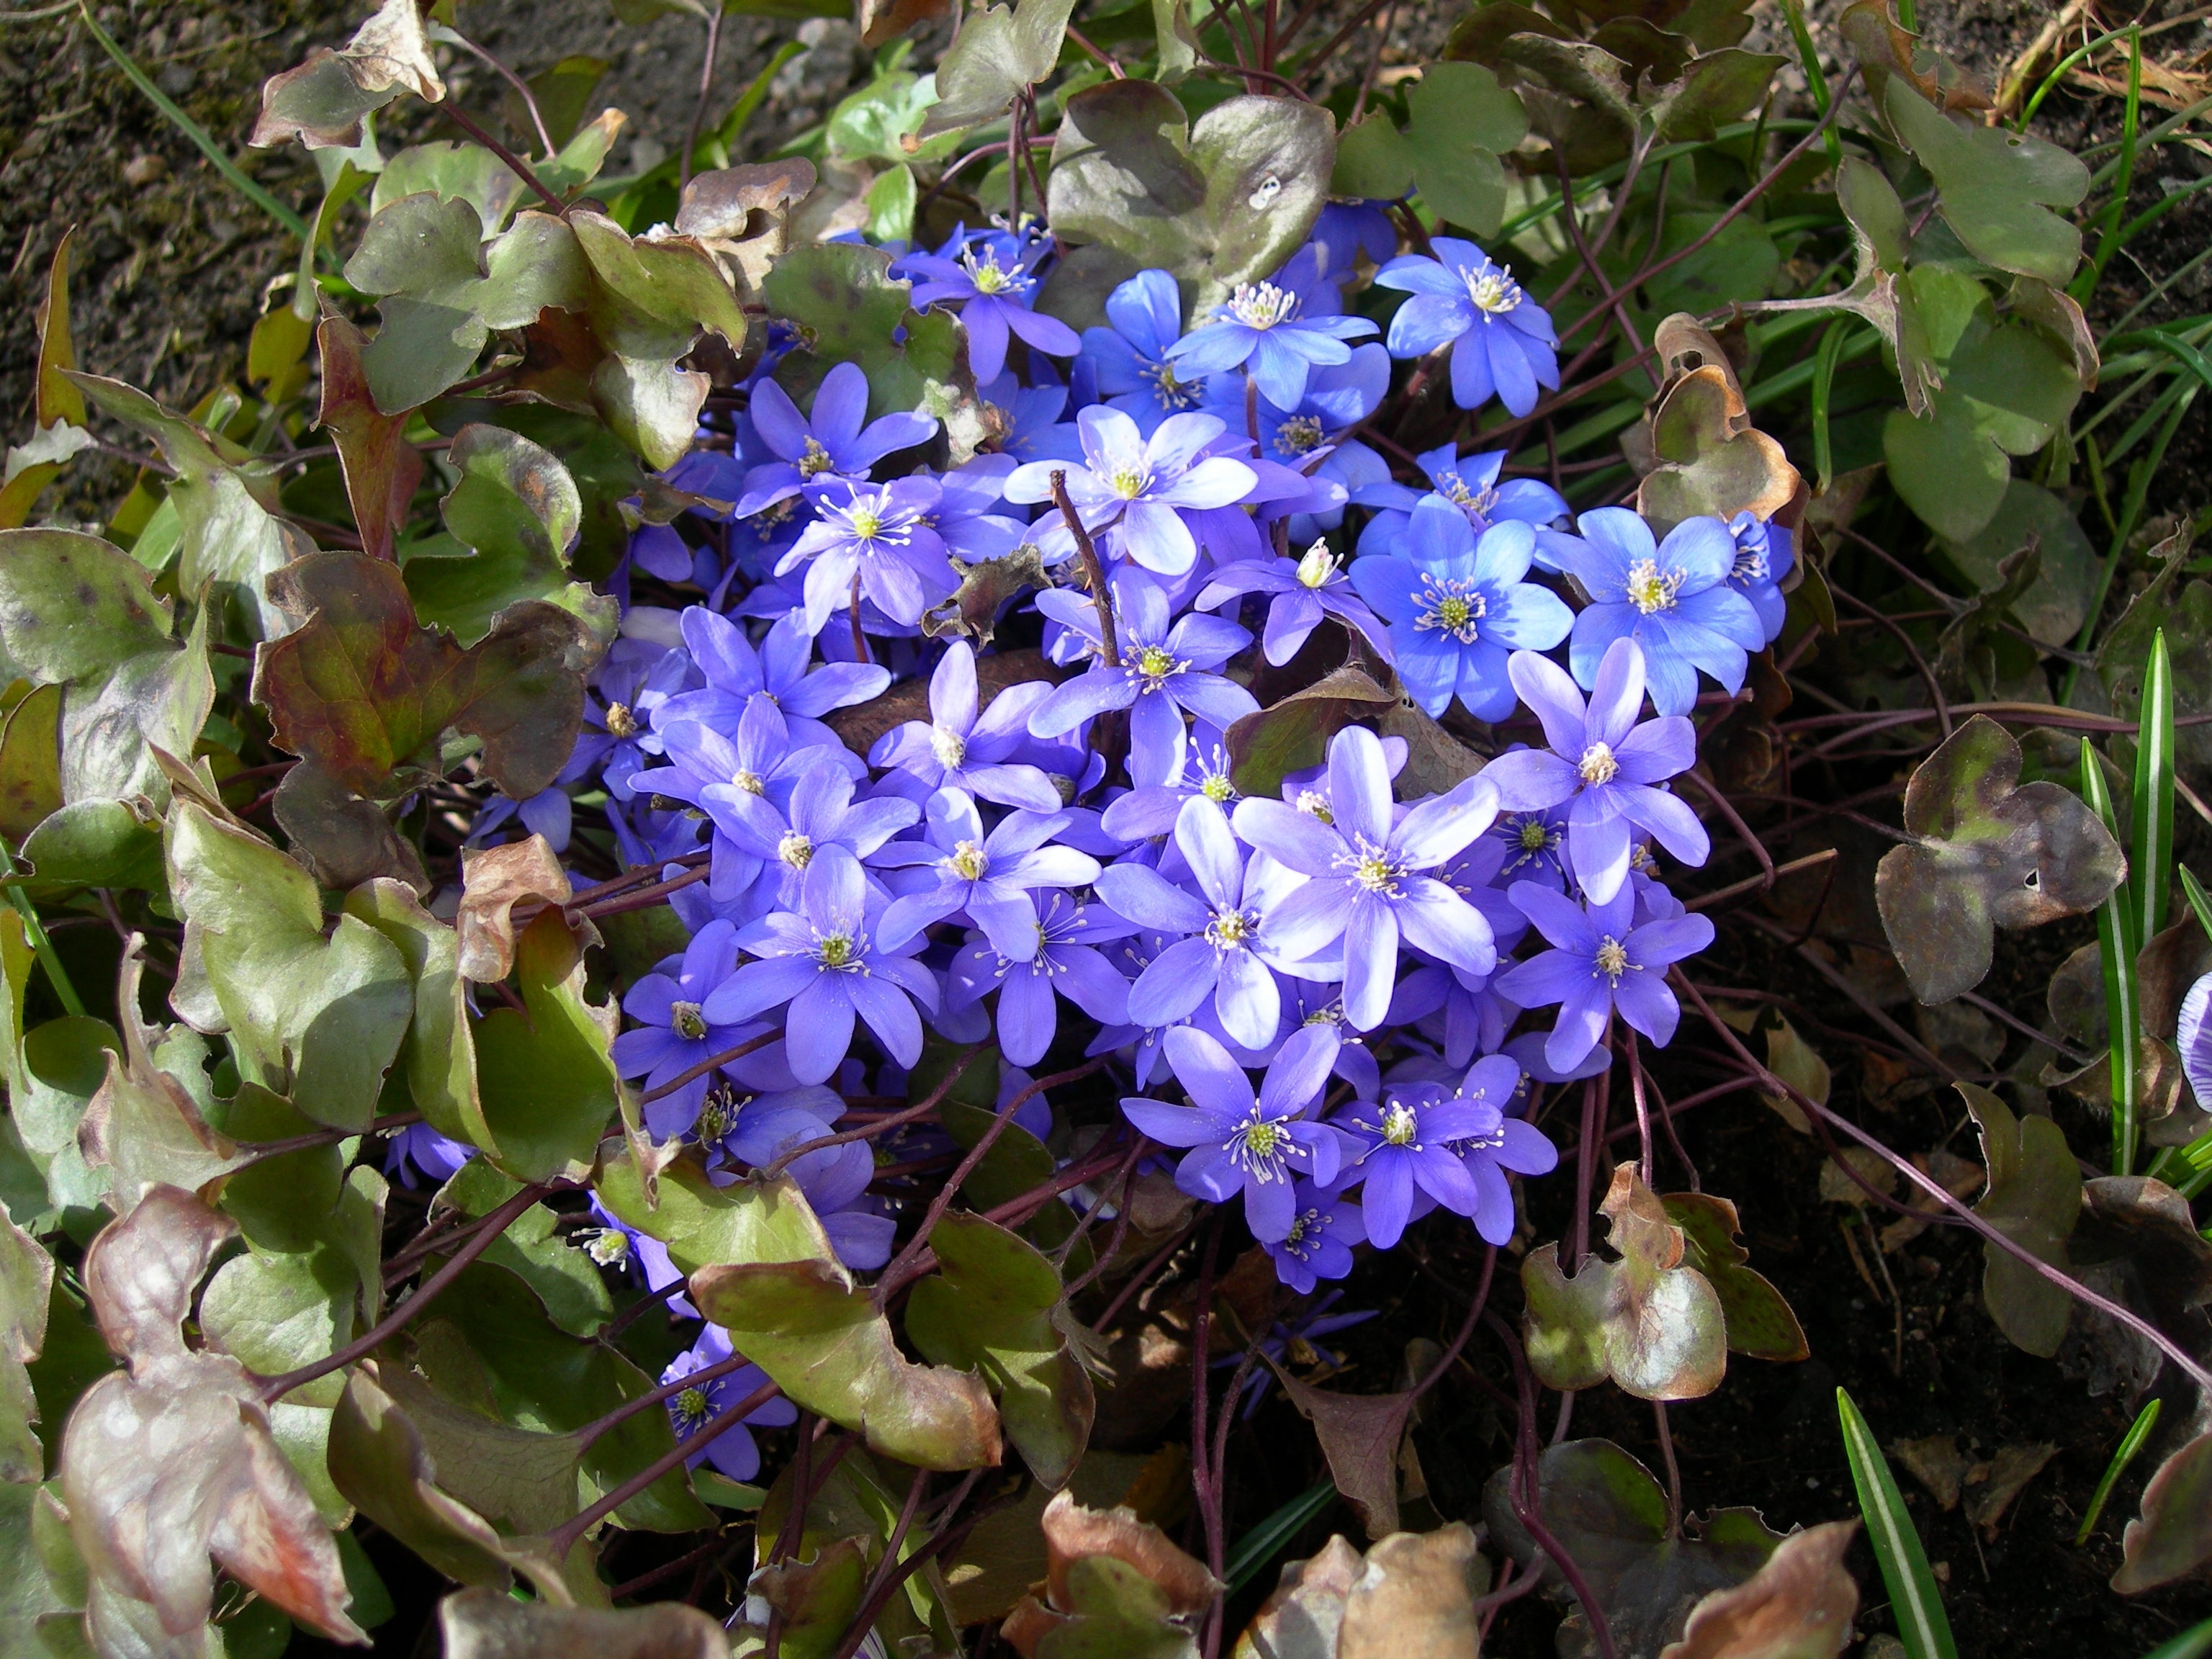 blue 6 petaled flowers